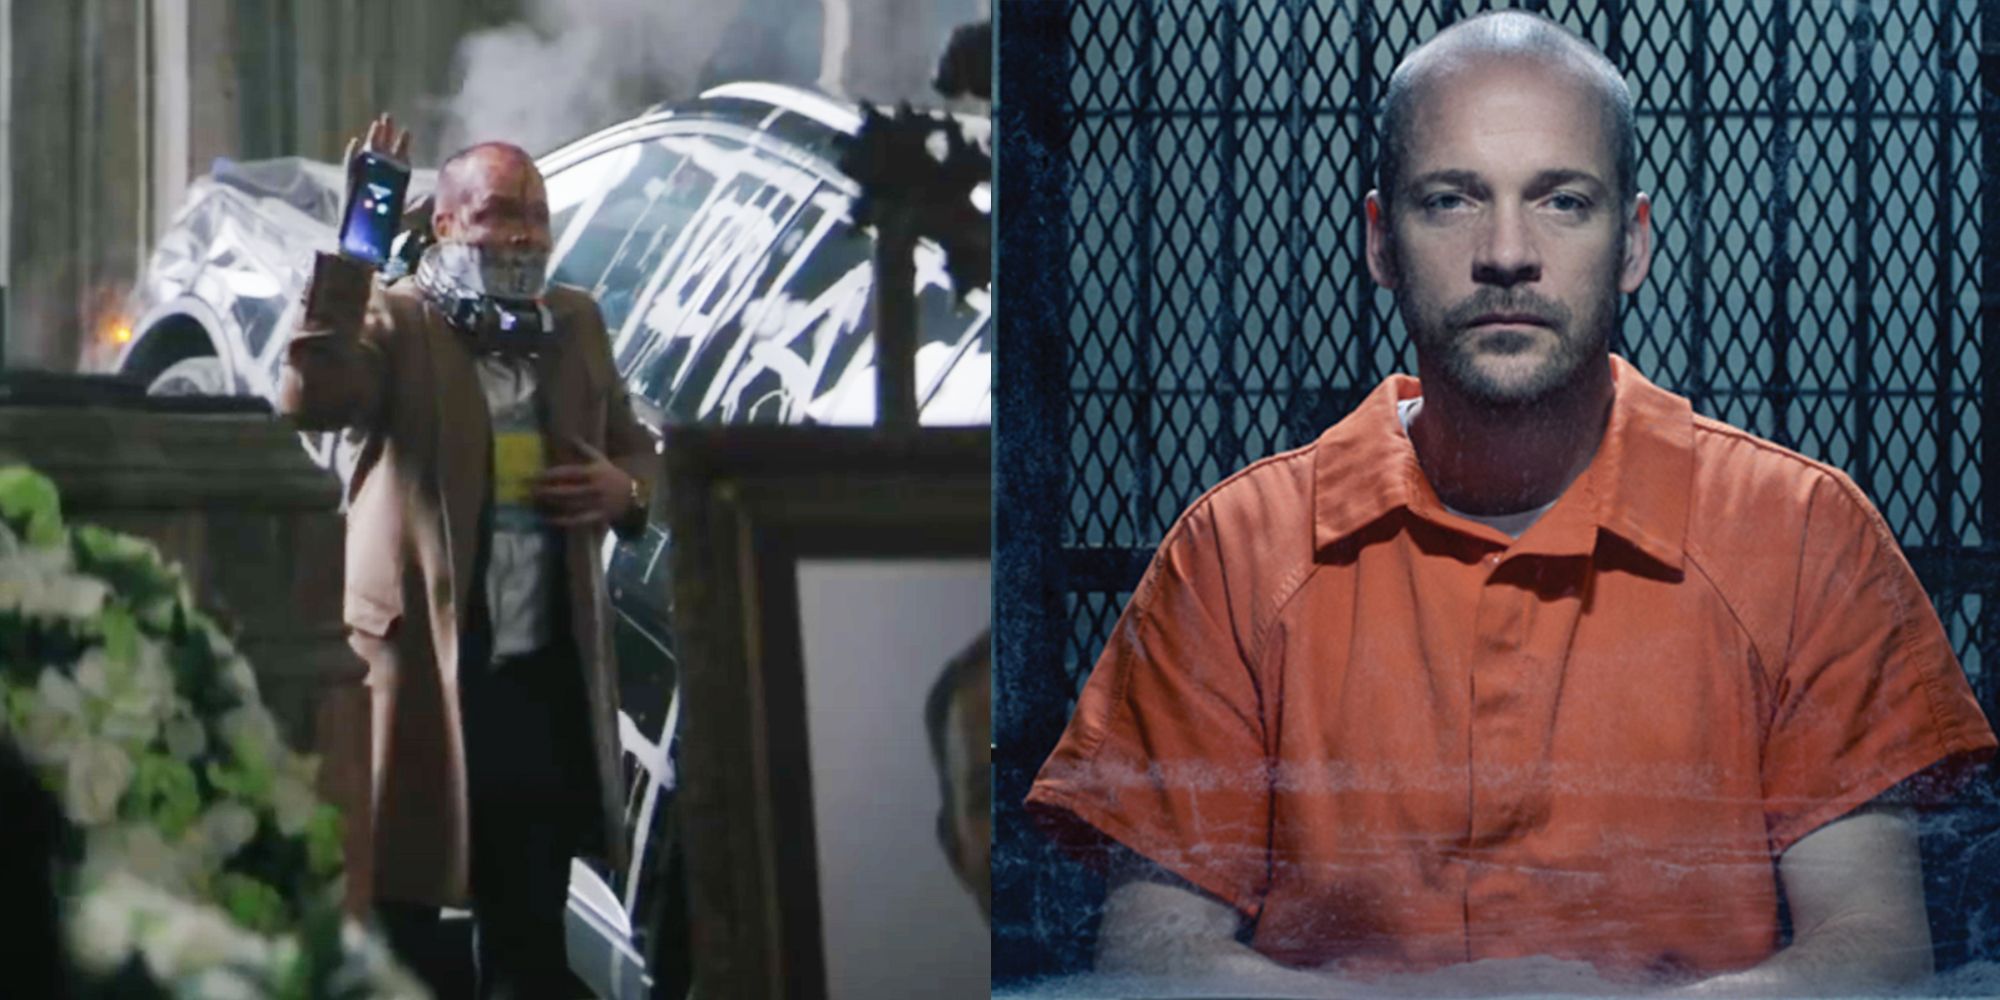 Peter Sarsgaard in The Killing alongside a screenshot from The Batman trailer